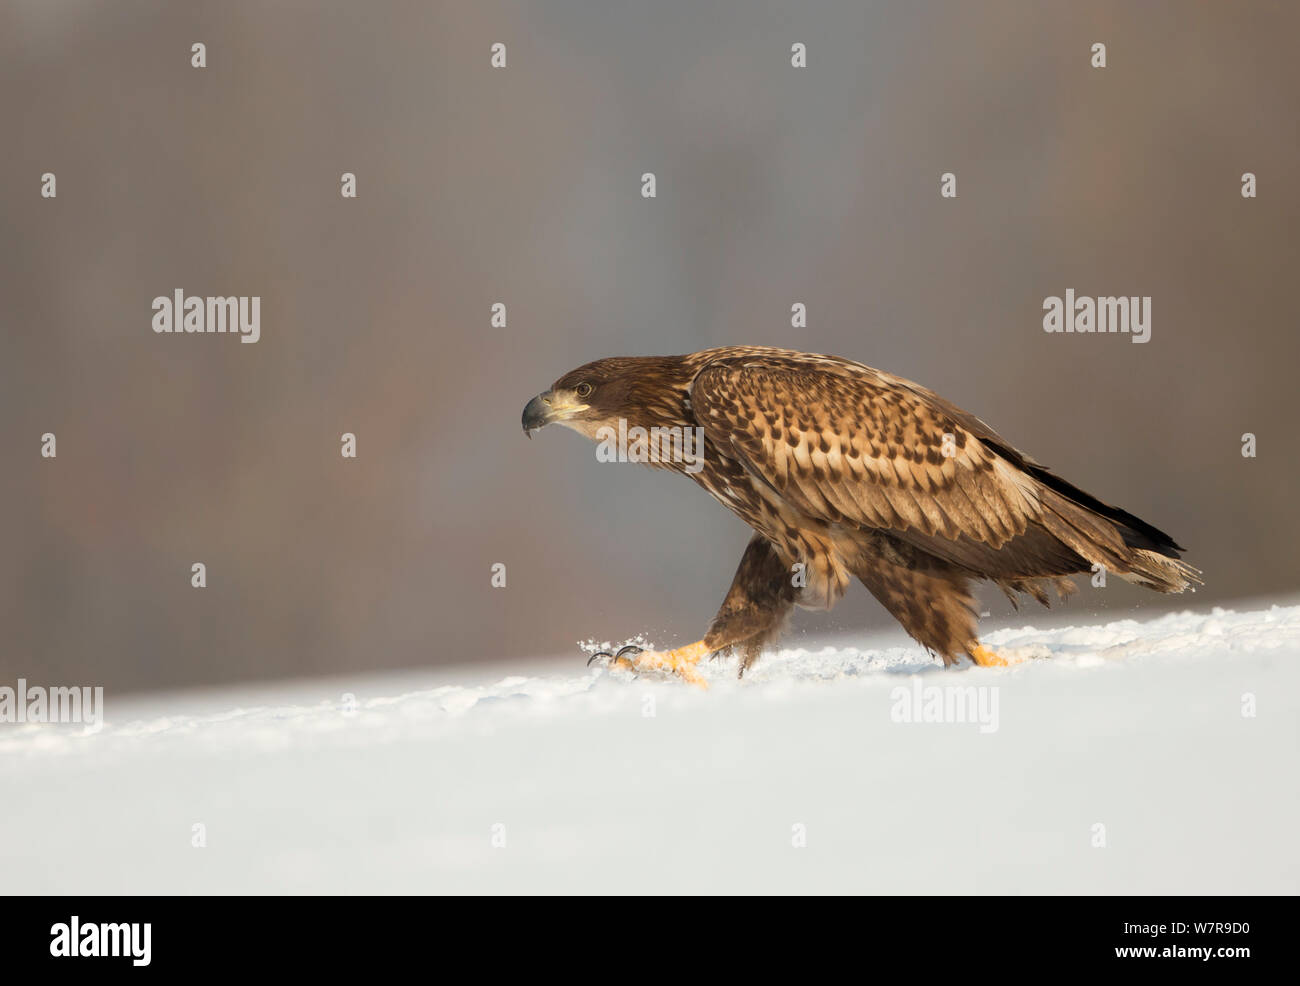 White-tailed eagle (Haliaeetus albicilla) in the snow, Poland, February. Stock Photo